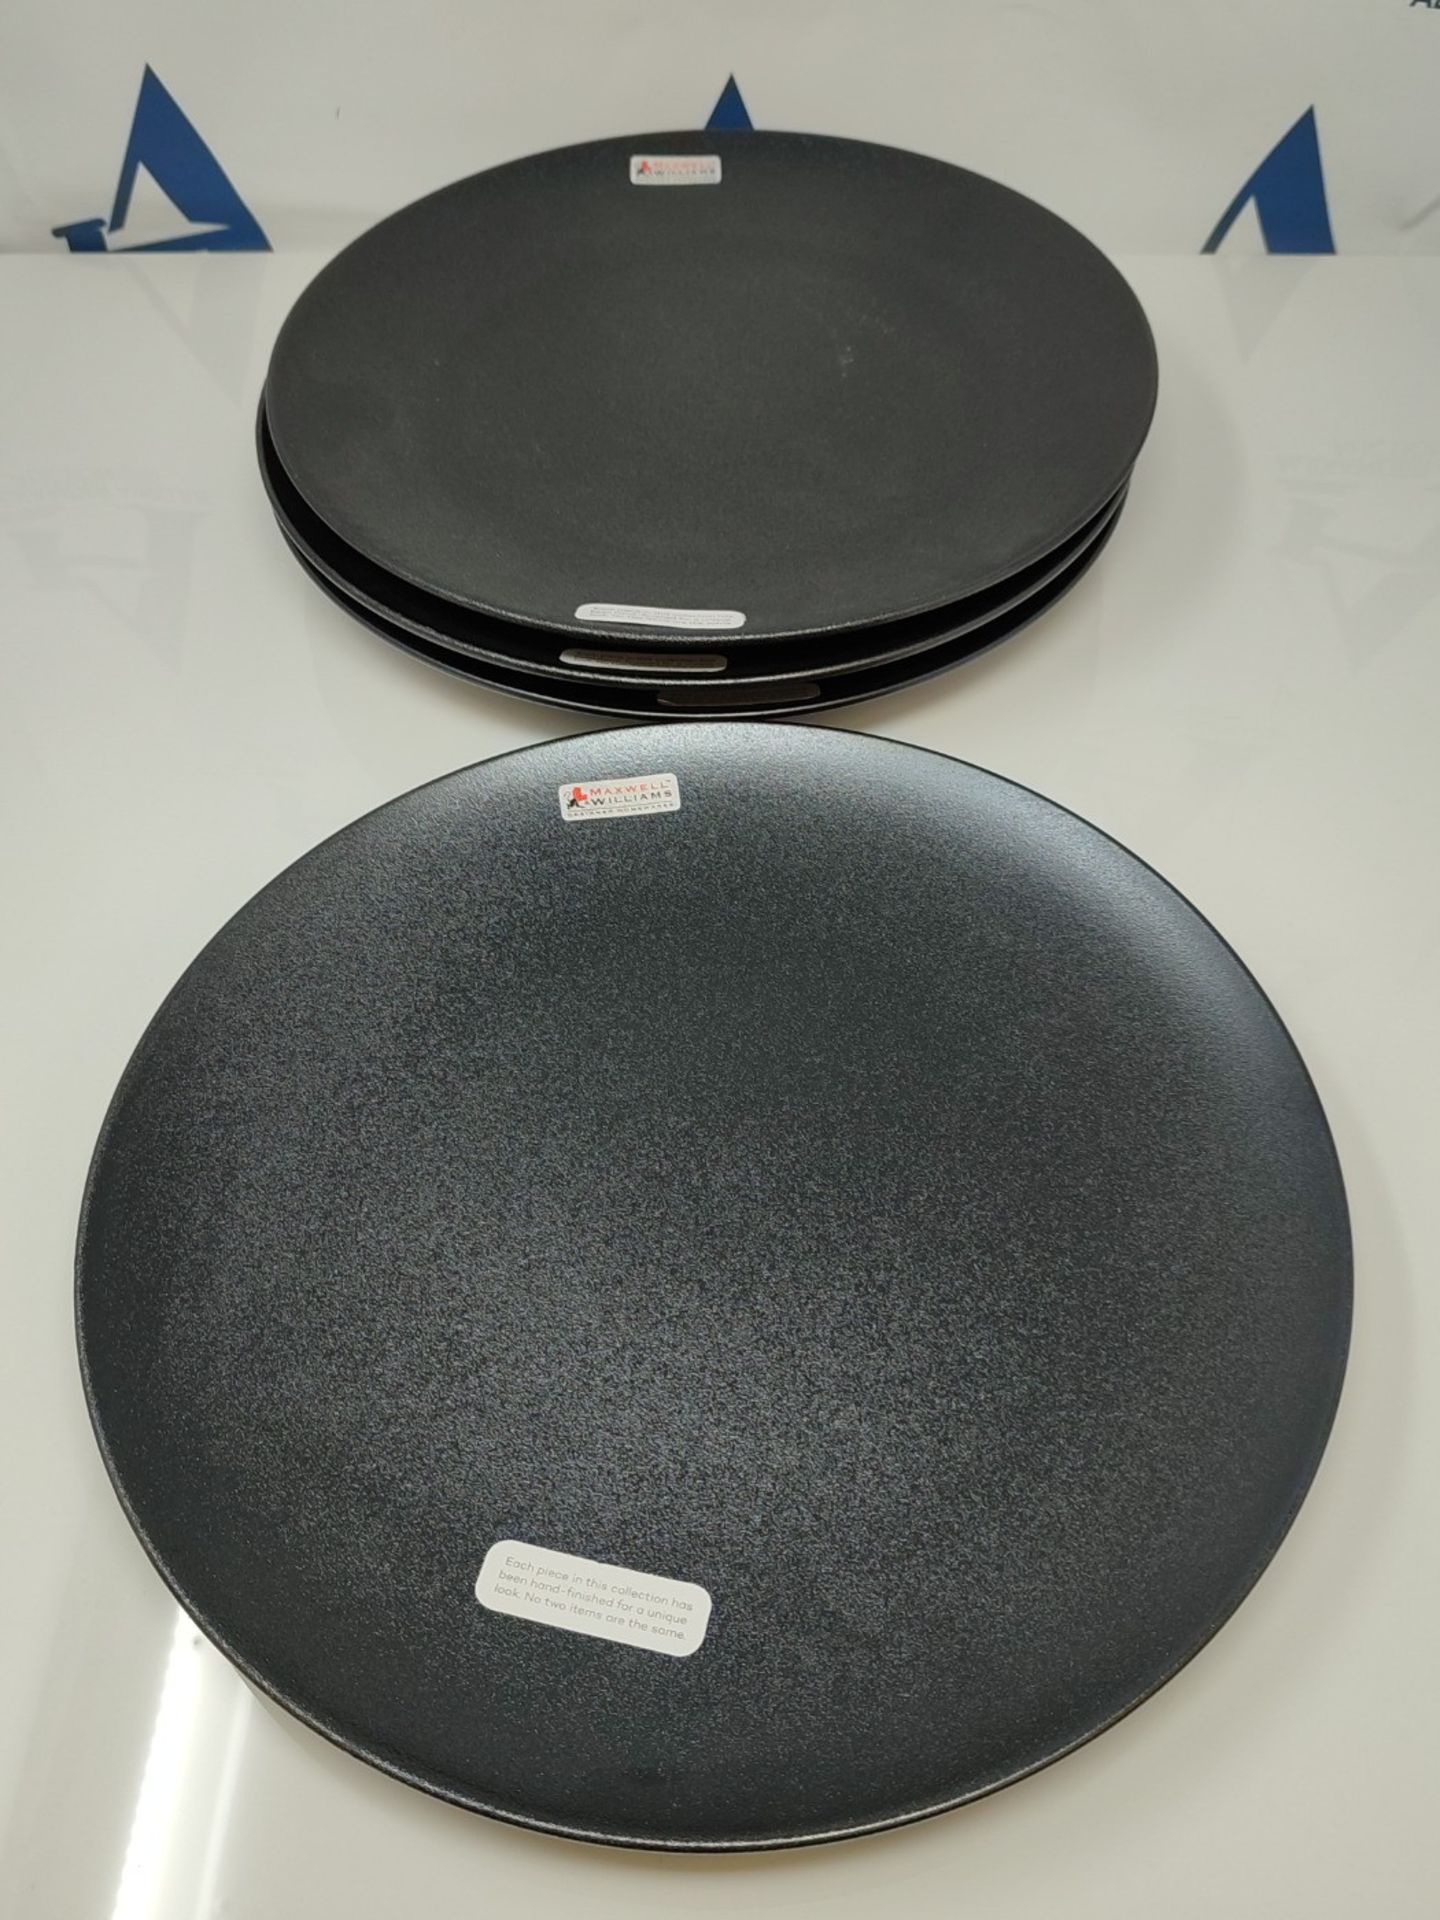 Maxwell & Williams Caviar Dinner Plates, Coupe Rim, Porcelain, Black, 27.5 cm, 4 Piece - Image 2 of 2